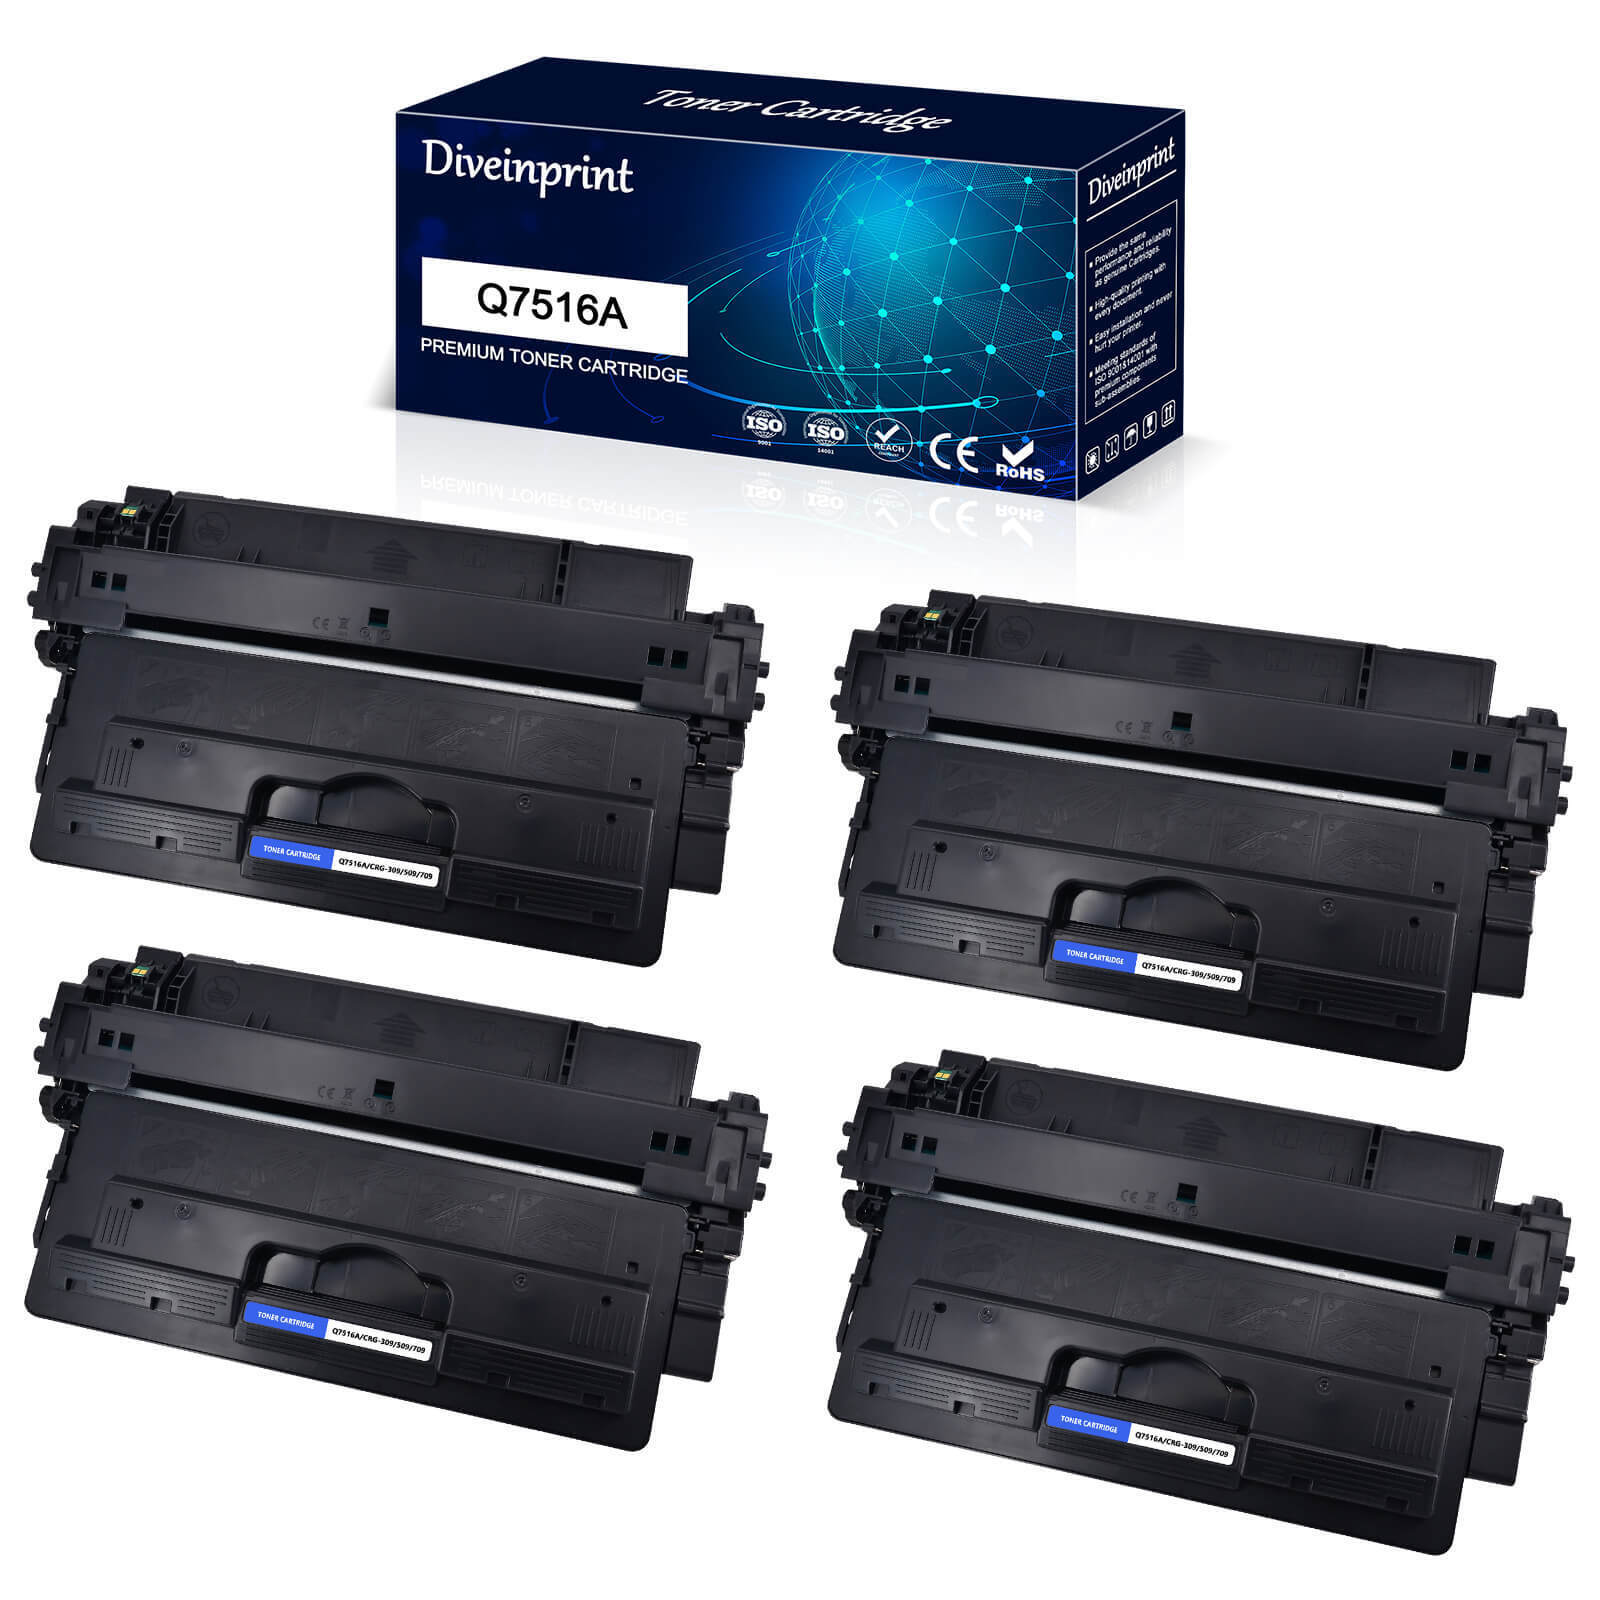 4 Pack Q7516A High Yield Toner Cartridge For HP LaserJet 5200 5200dtn 5200tn